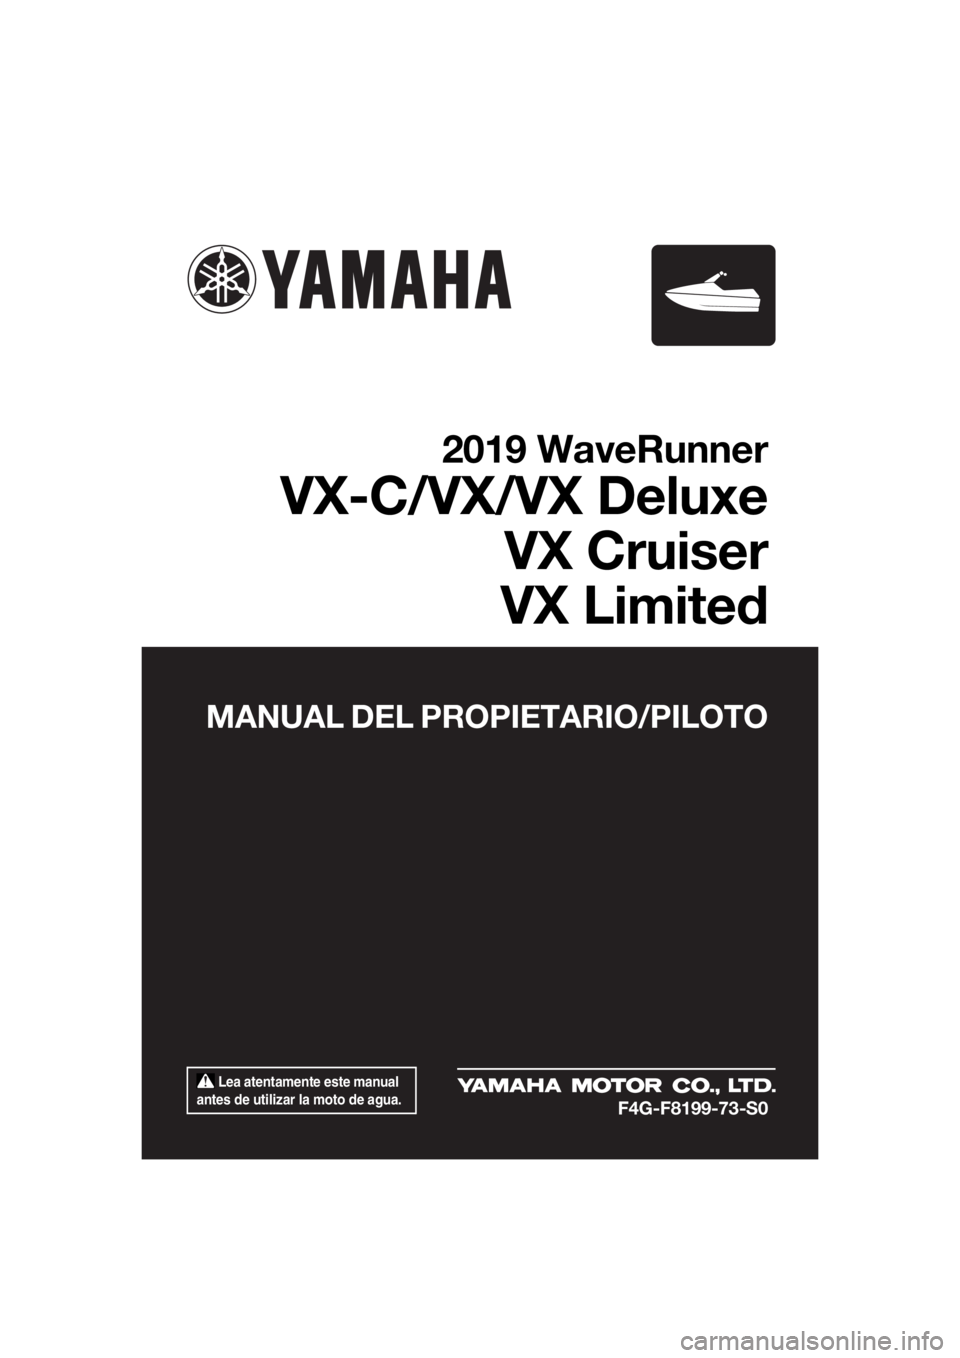 YAMAHA VX 2019  Manuale de Empleo (in Spanish) 